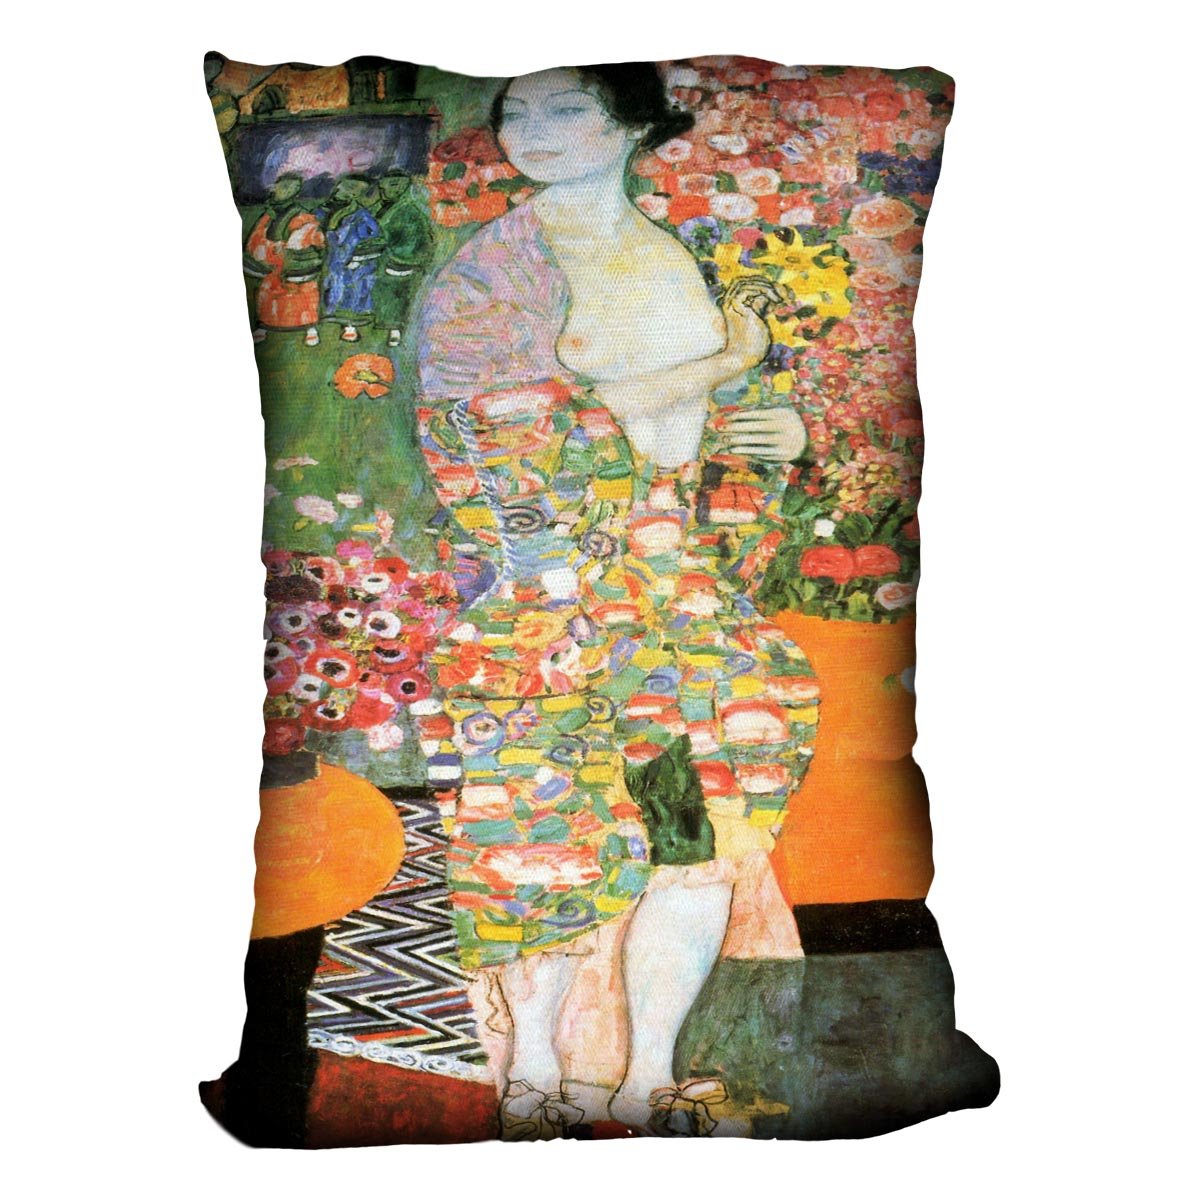 The dancer by Klimt Throw Pillow